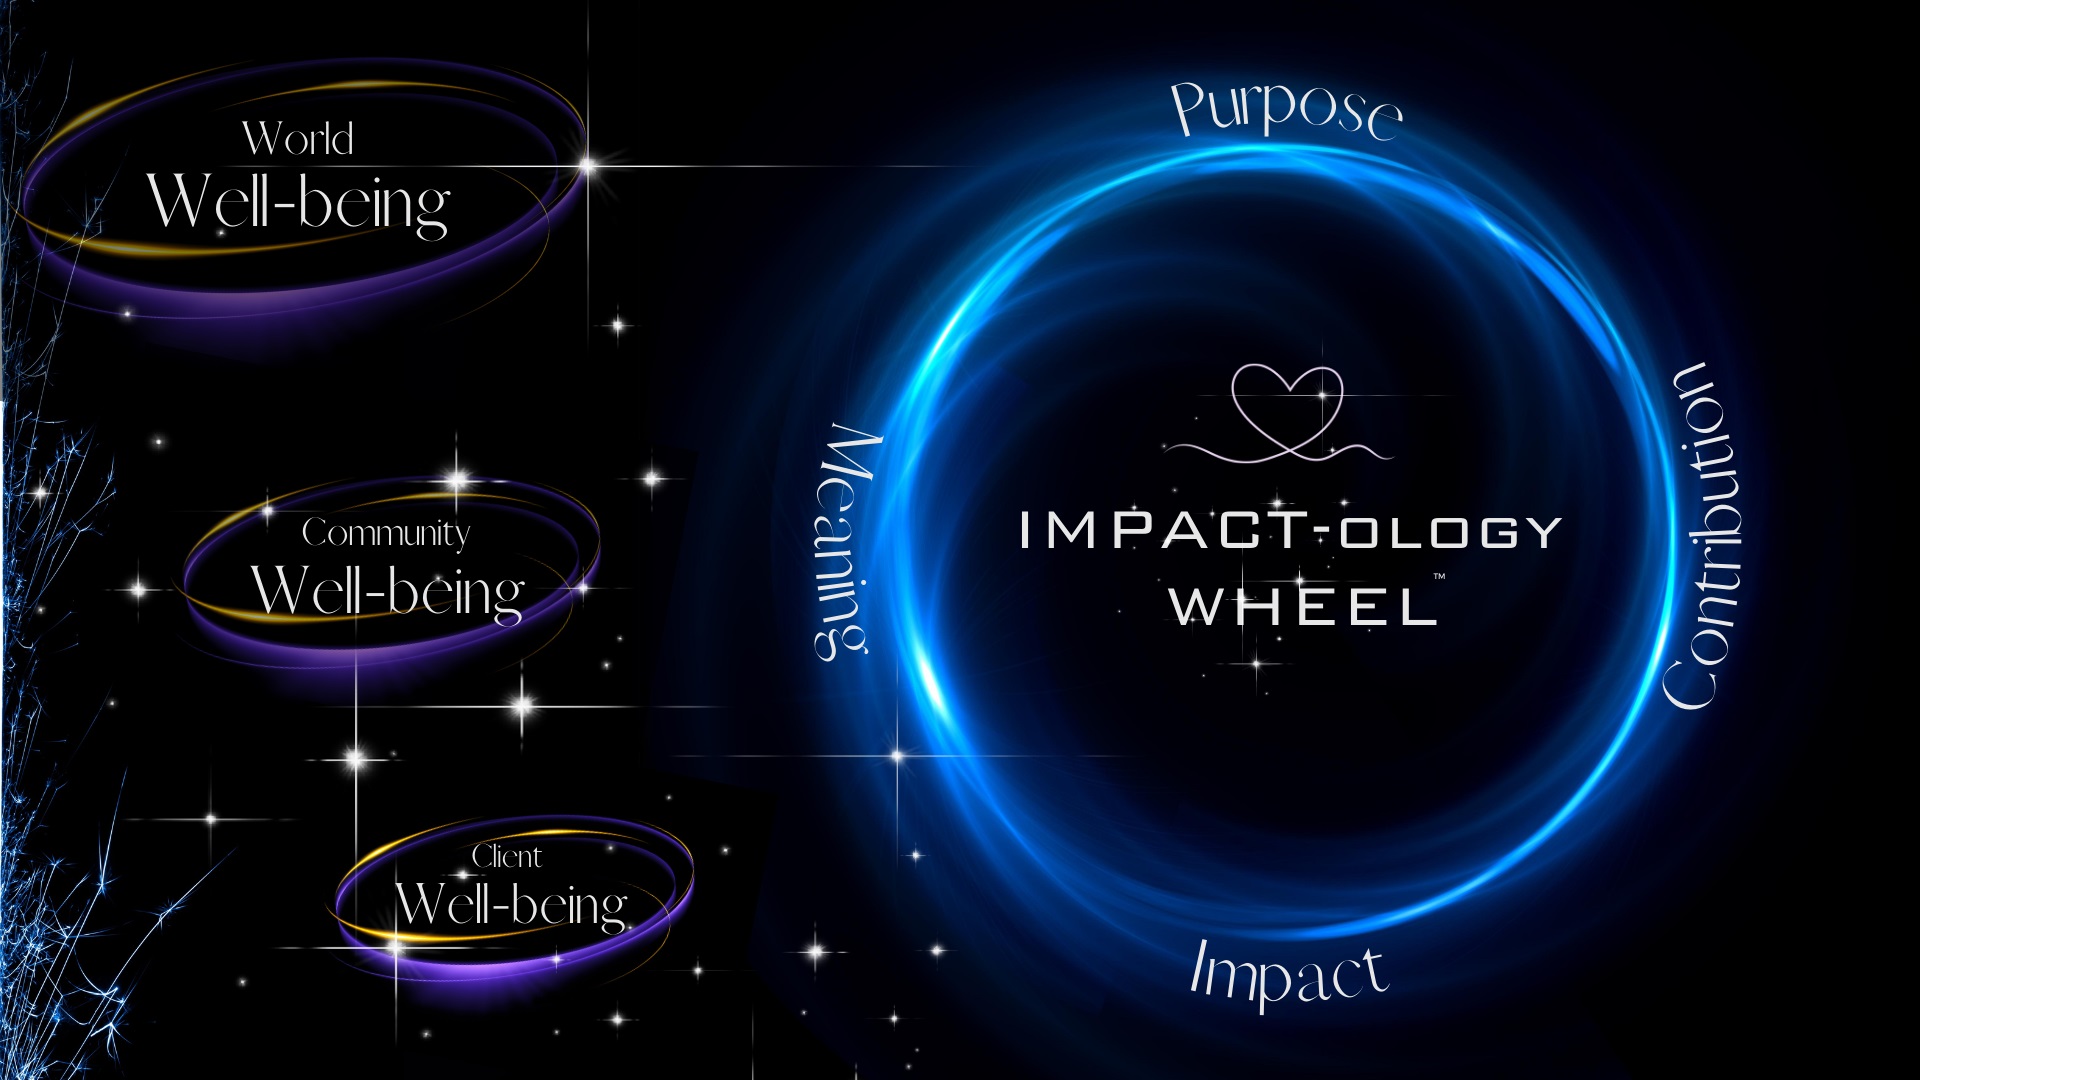 Impact-ology wheel leaves wellbeing in its wake